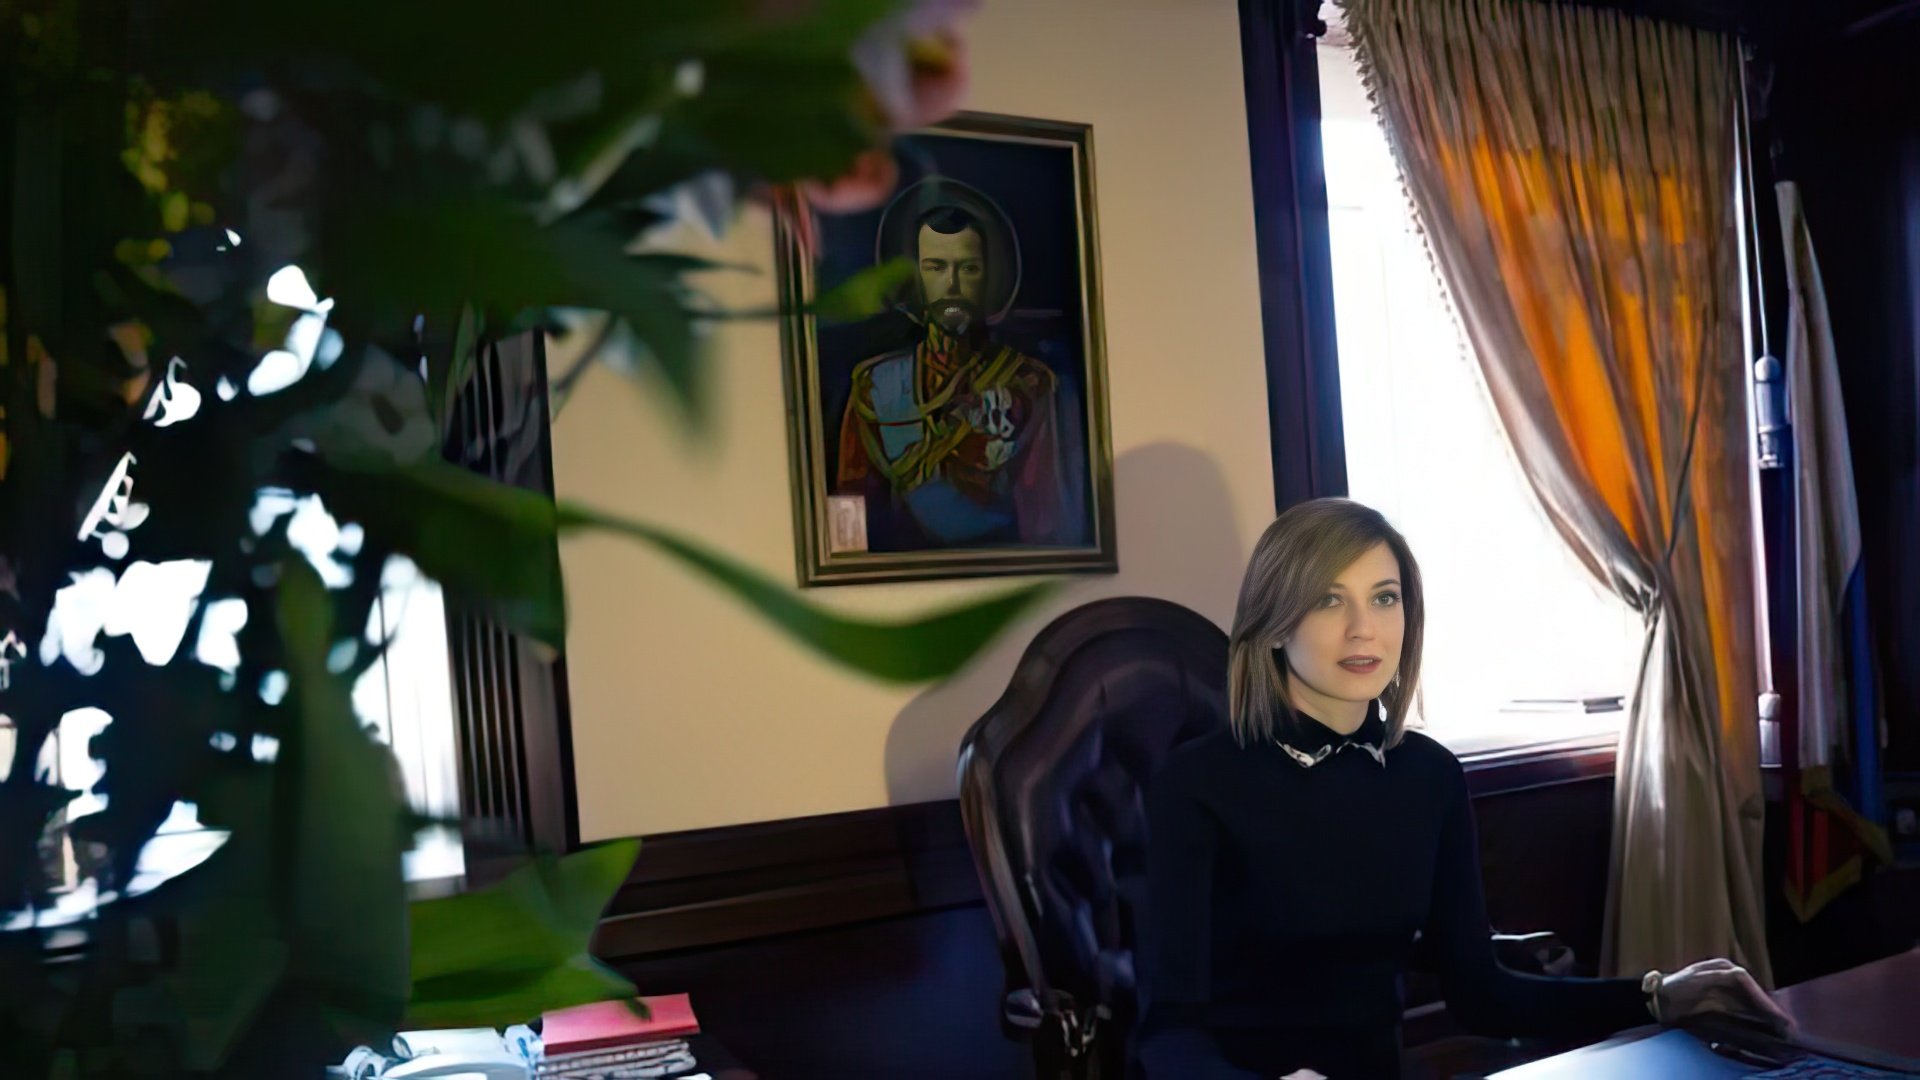 The office of Natalia Poklonskaya. Portrait of hholas II hanging over the table